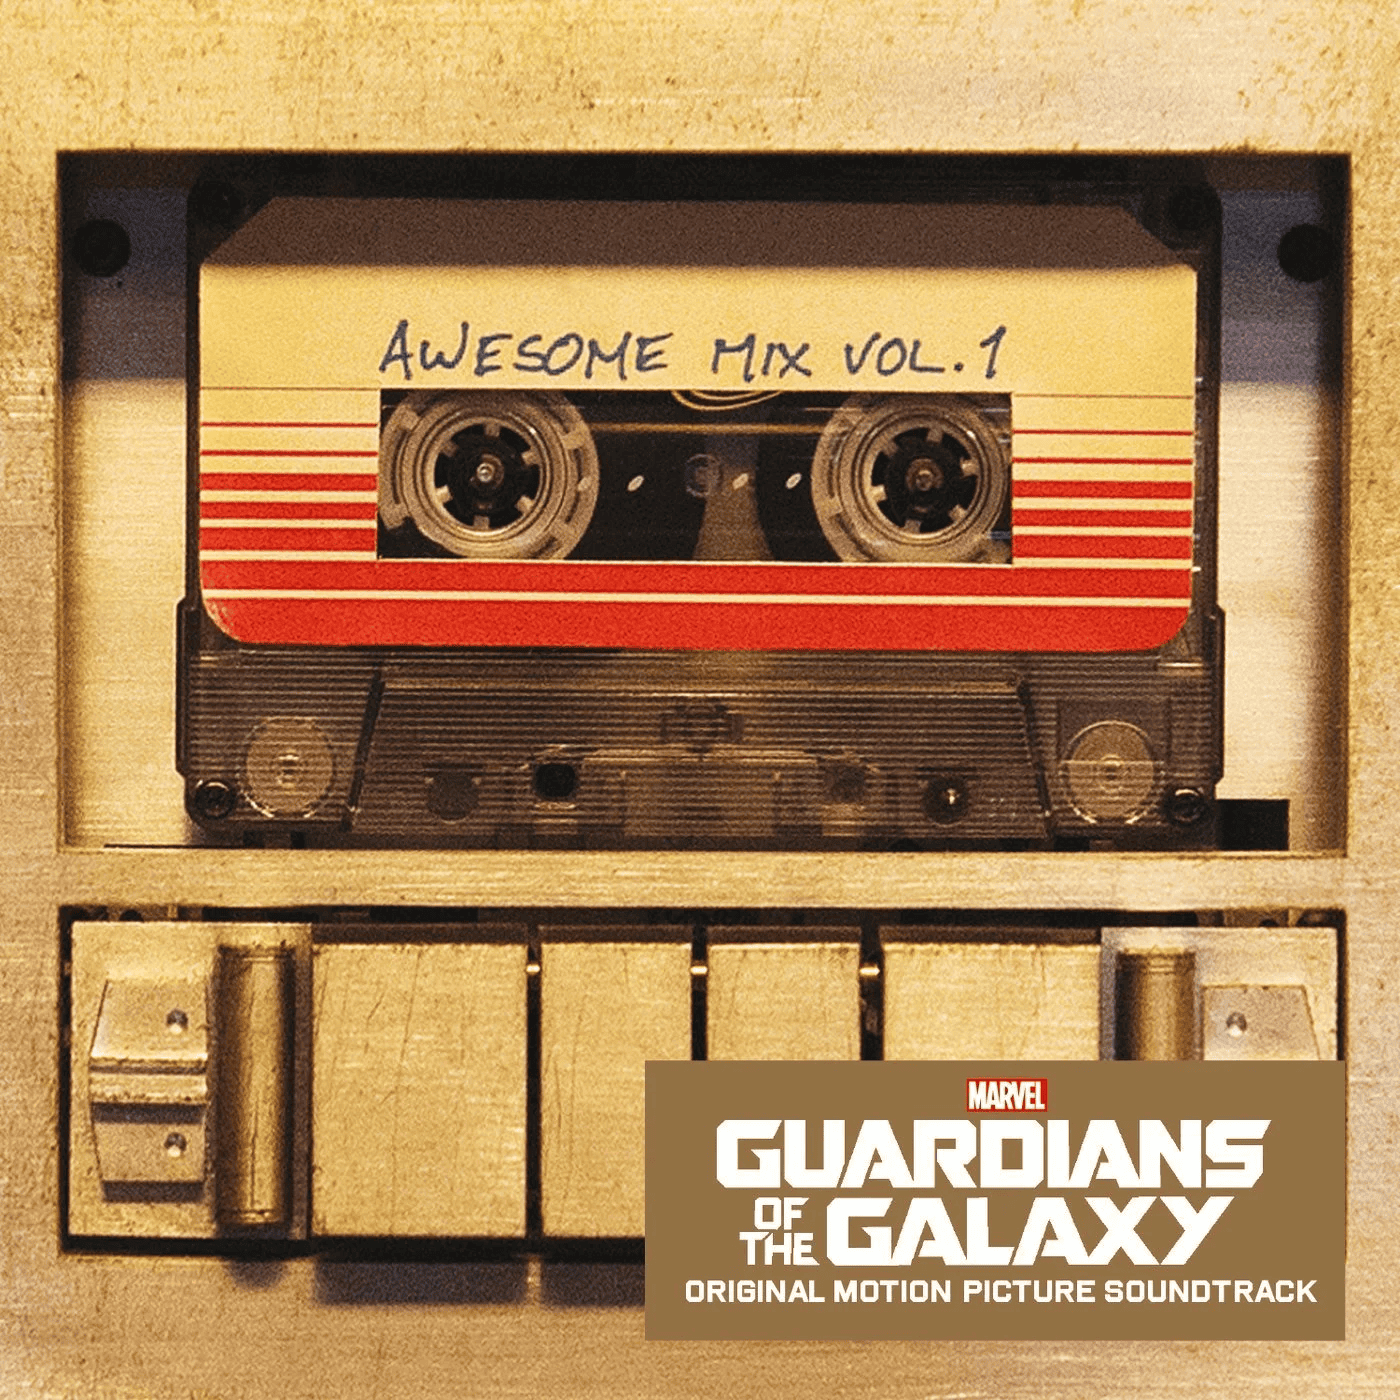 GUARDIANS OF THE GALAXY Vol. 1 (Awesome Mix Vol 1) - Soundtrack Vinyl - JWrayRecords